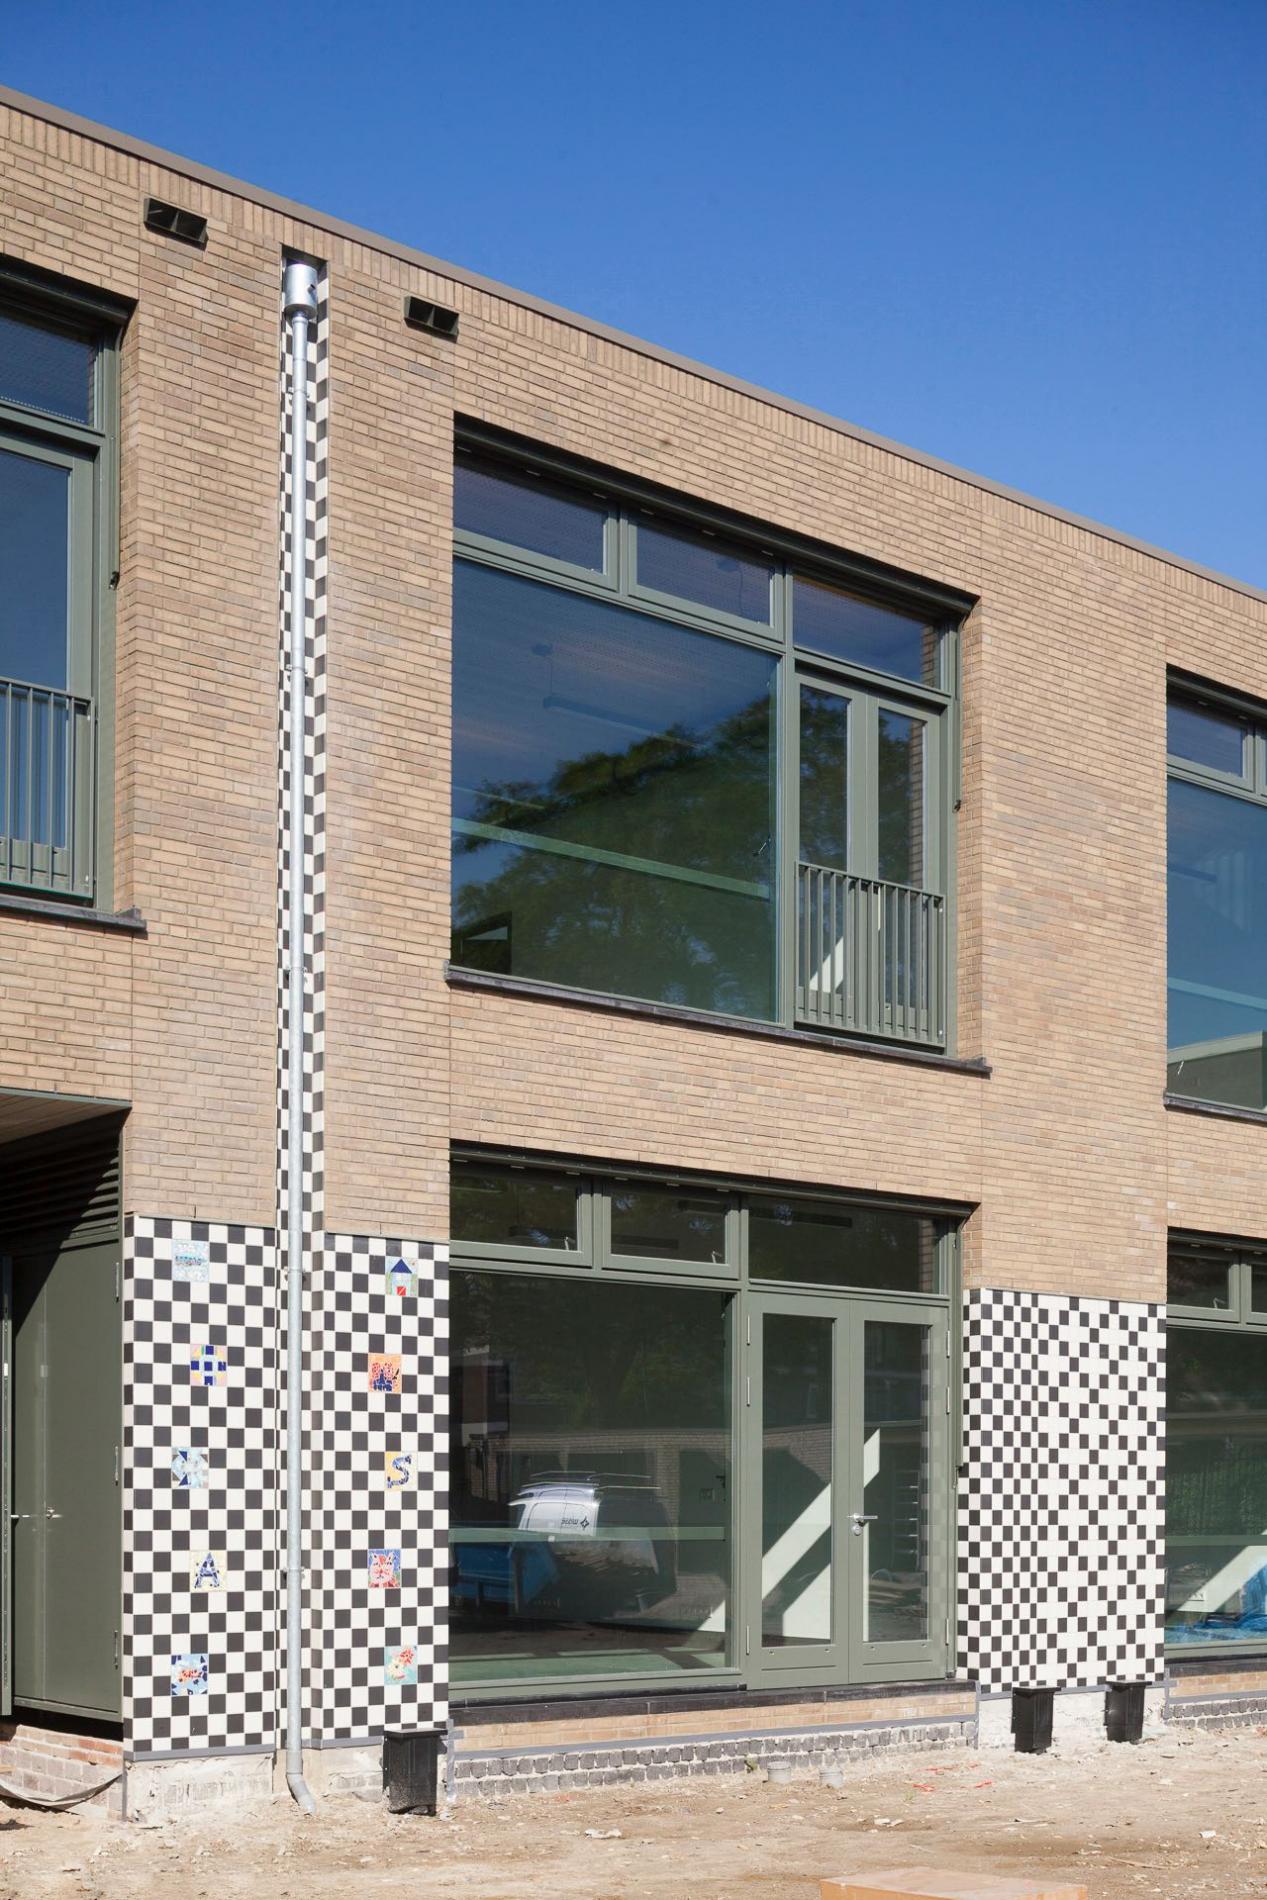 A.J. Schreuderschool, Rotterdam - Korteknie Stuhlmacher Architecten 3a